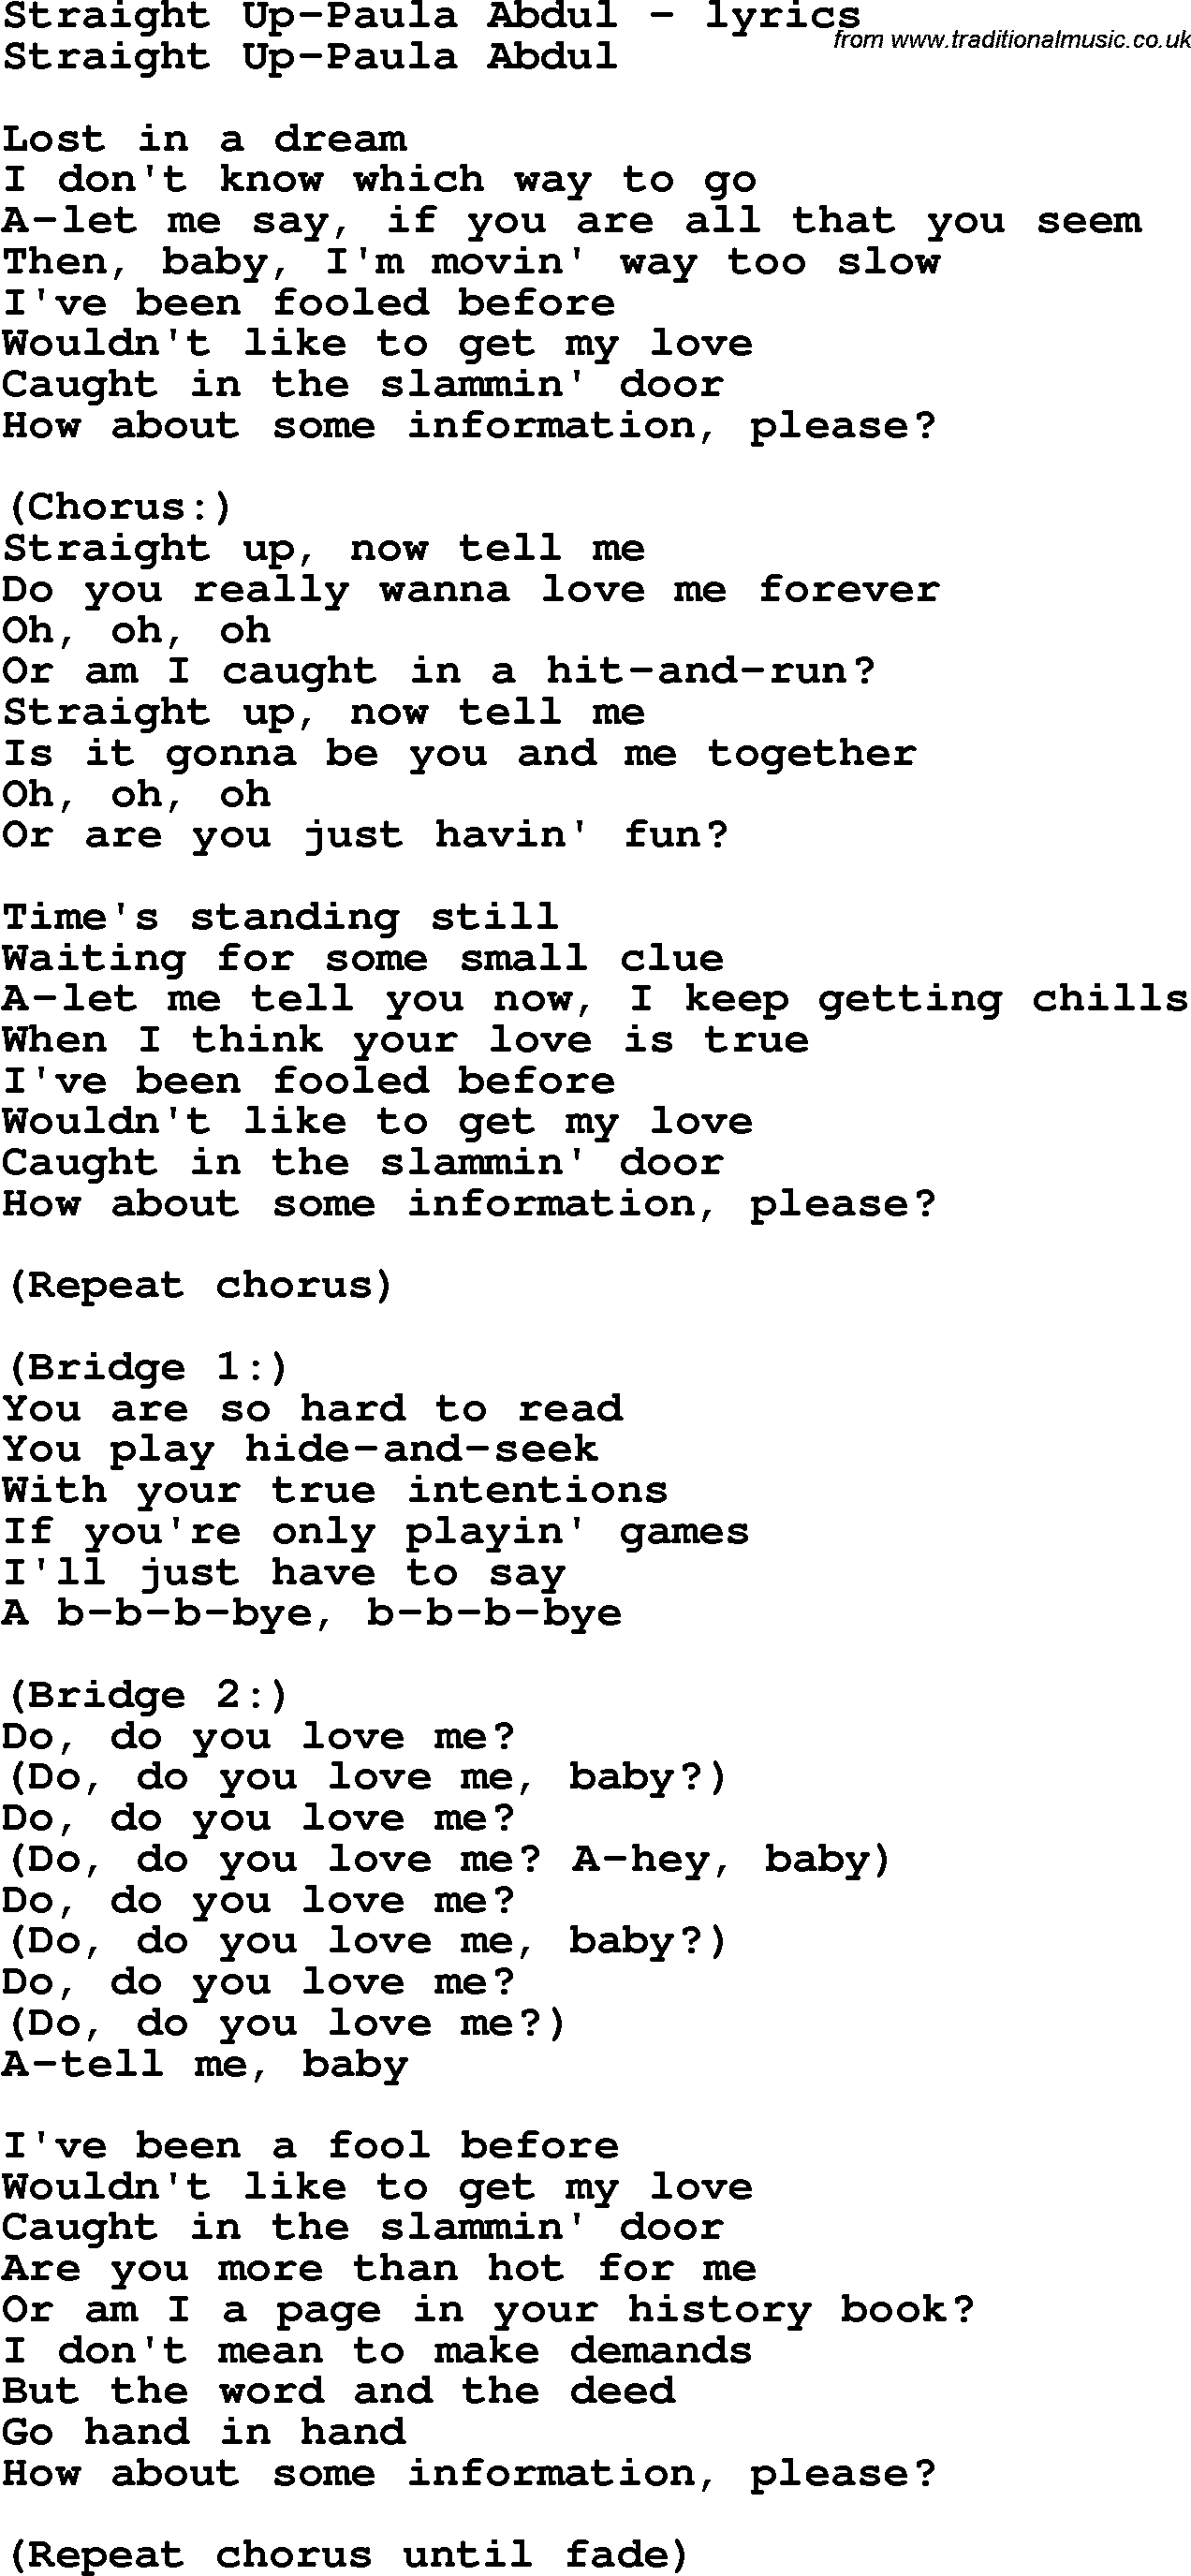 Love Song Lyrics for: Straight Up-Paula Abdul